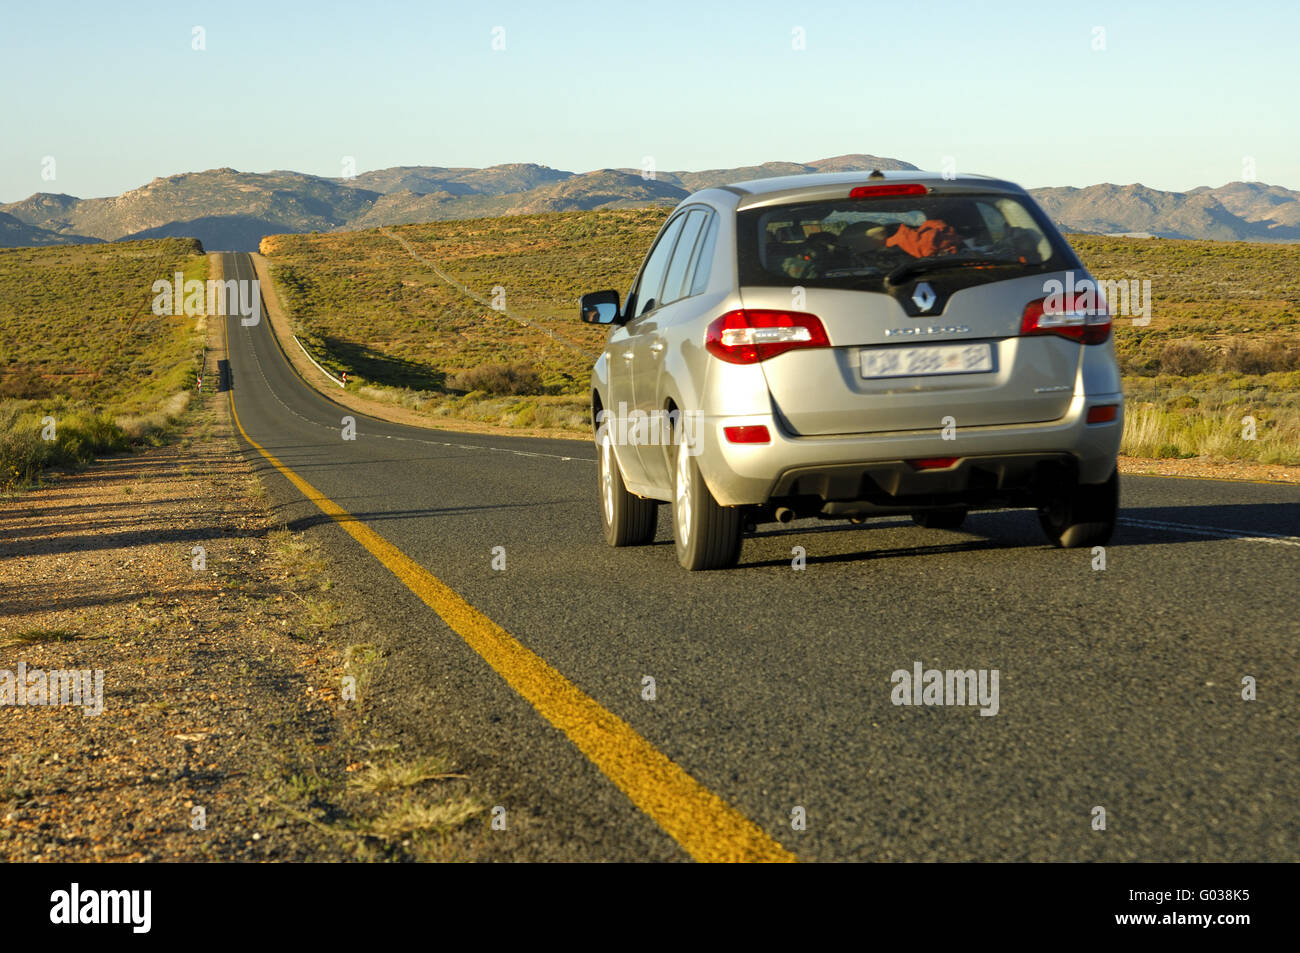 Car on the road N7 near Springbok, South Africa Stock Photo